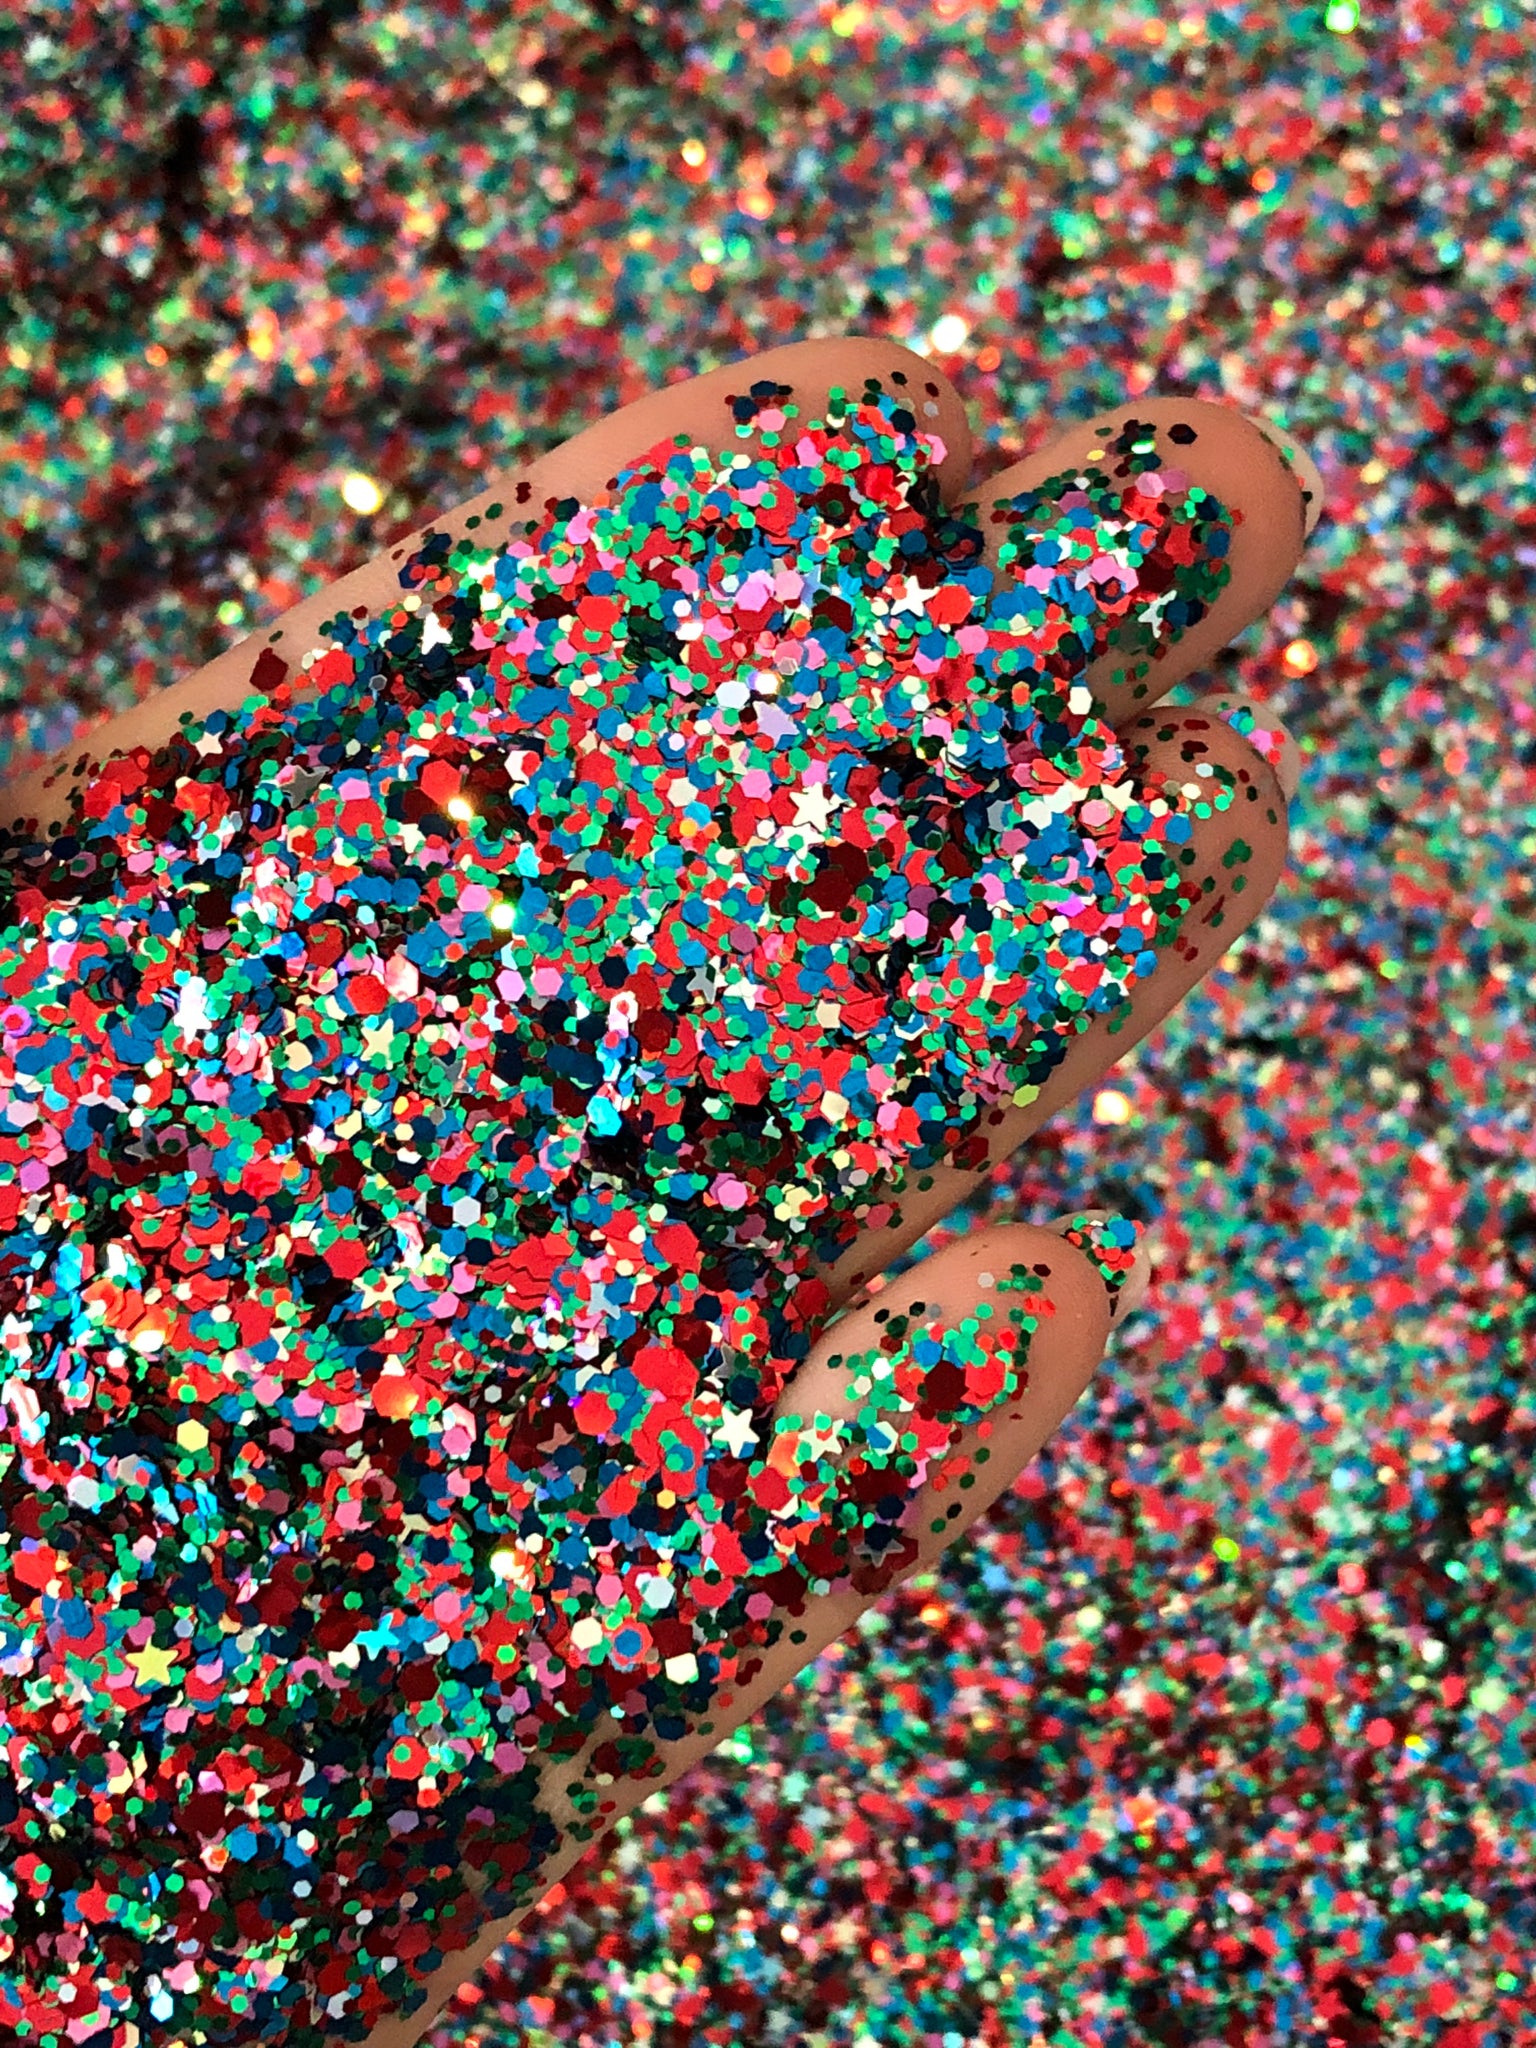 CUSTOM: Craft Glitter Mix (8 Colors)-CUST8